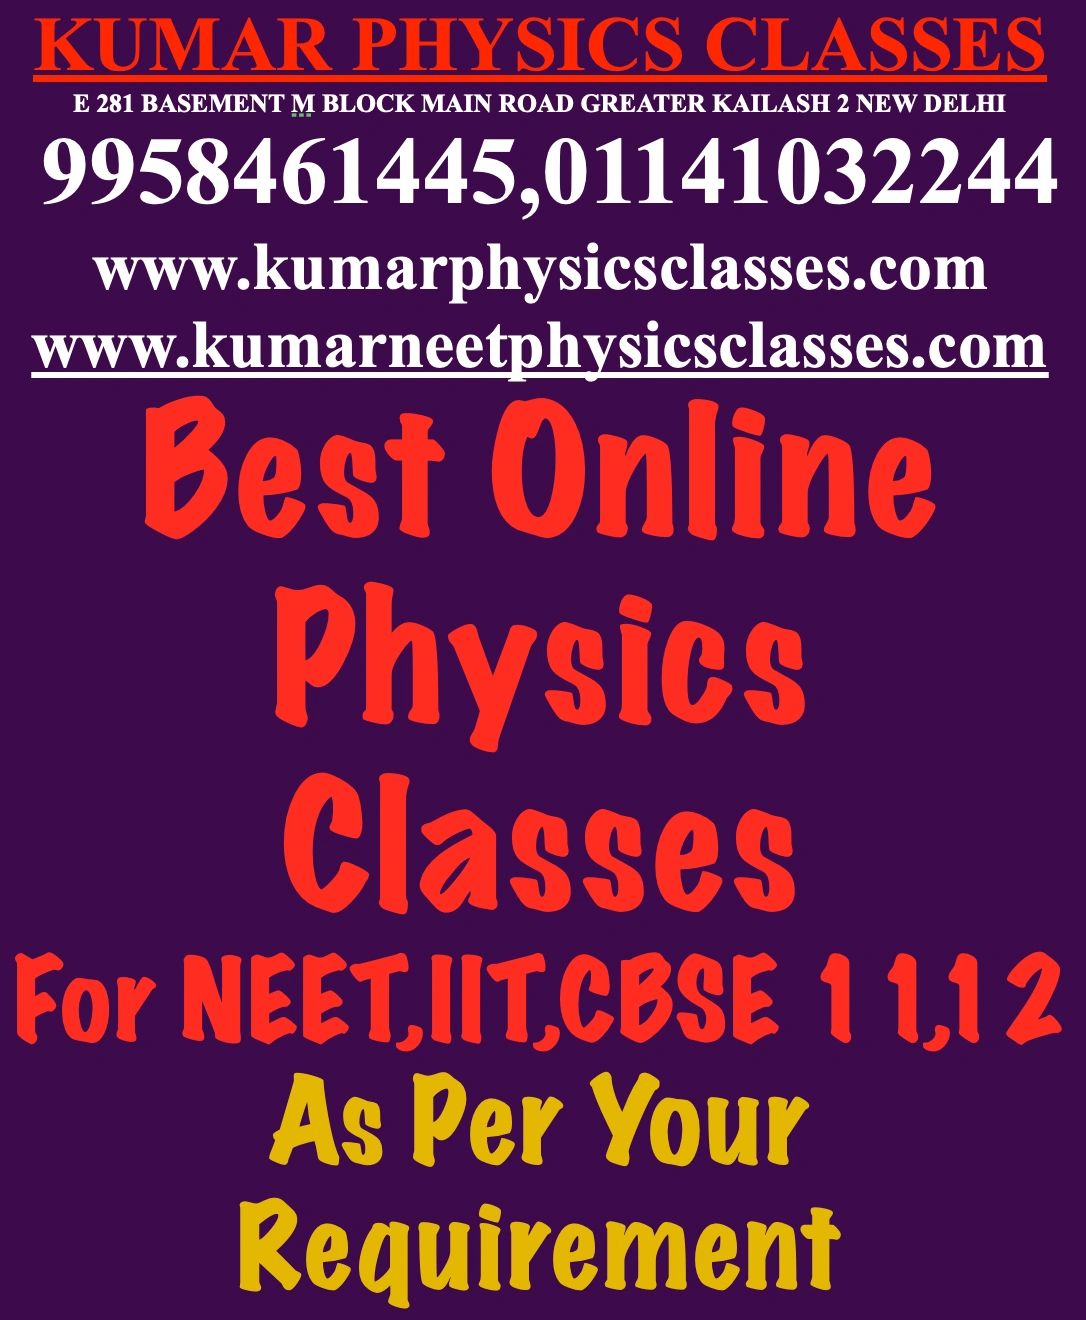 Best physics online classes in Delhi ,Mumbai,Chennai,Kolkata,Pune,Hyderabad,bangalore,Ahmedabad